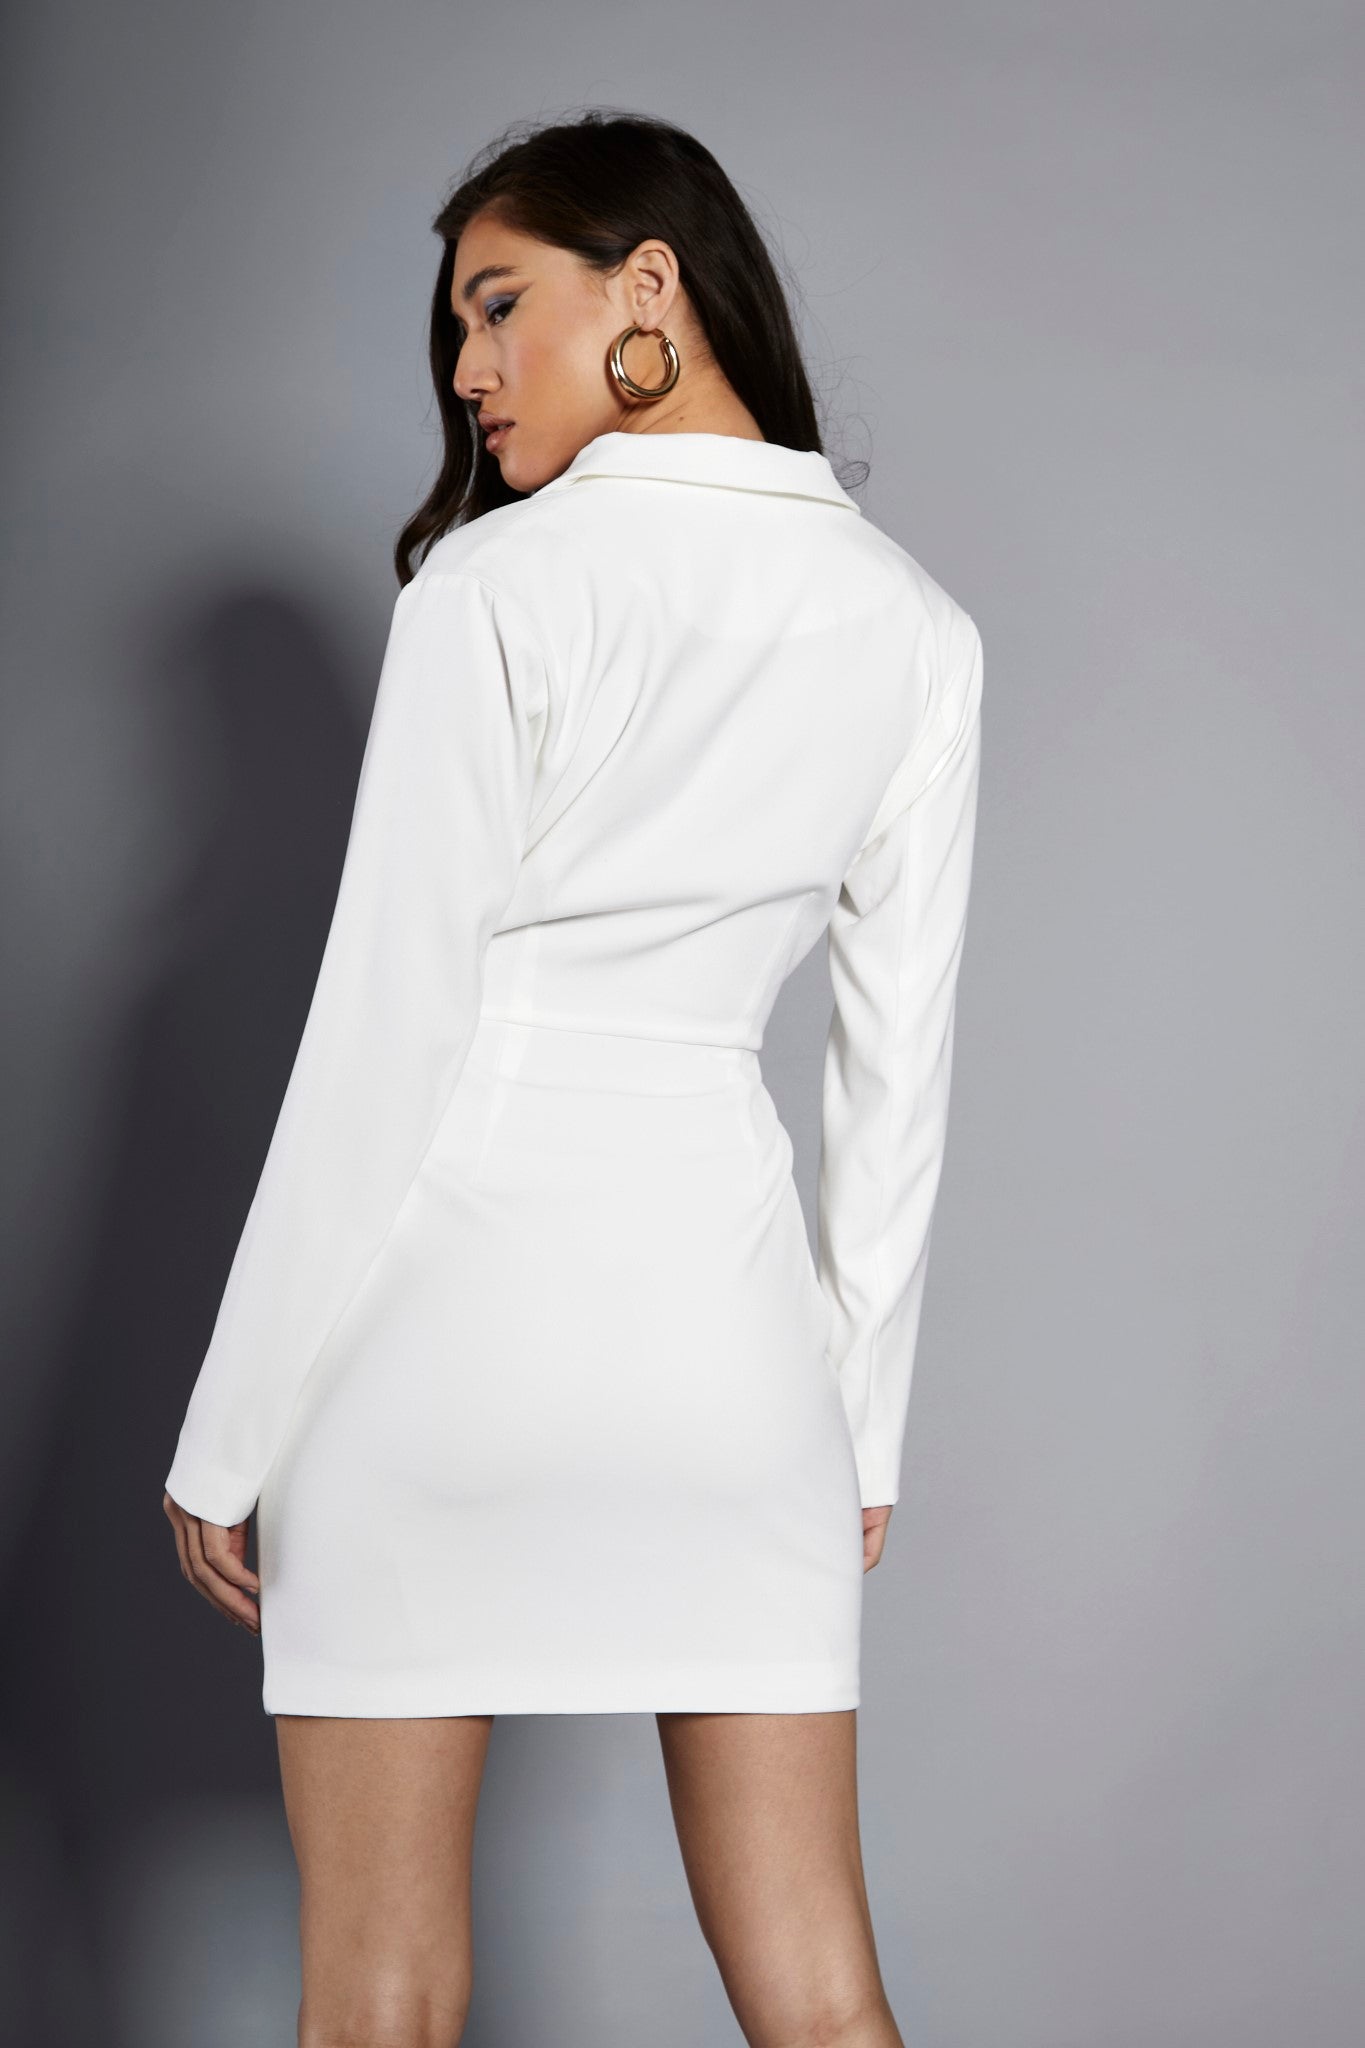 Glamorous Studio White Blazer Dress with Cut Out Details